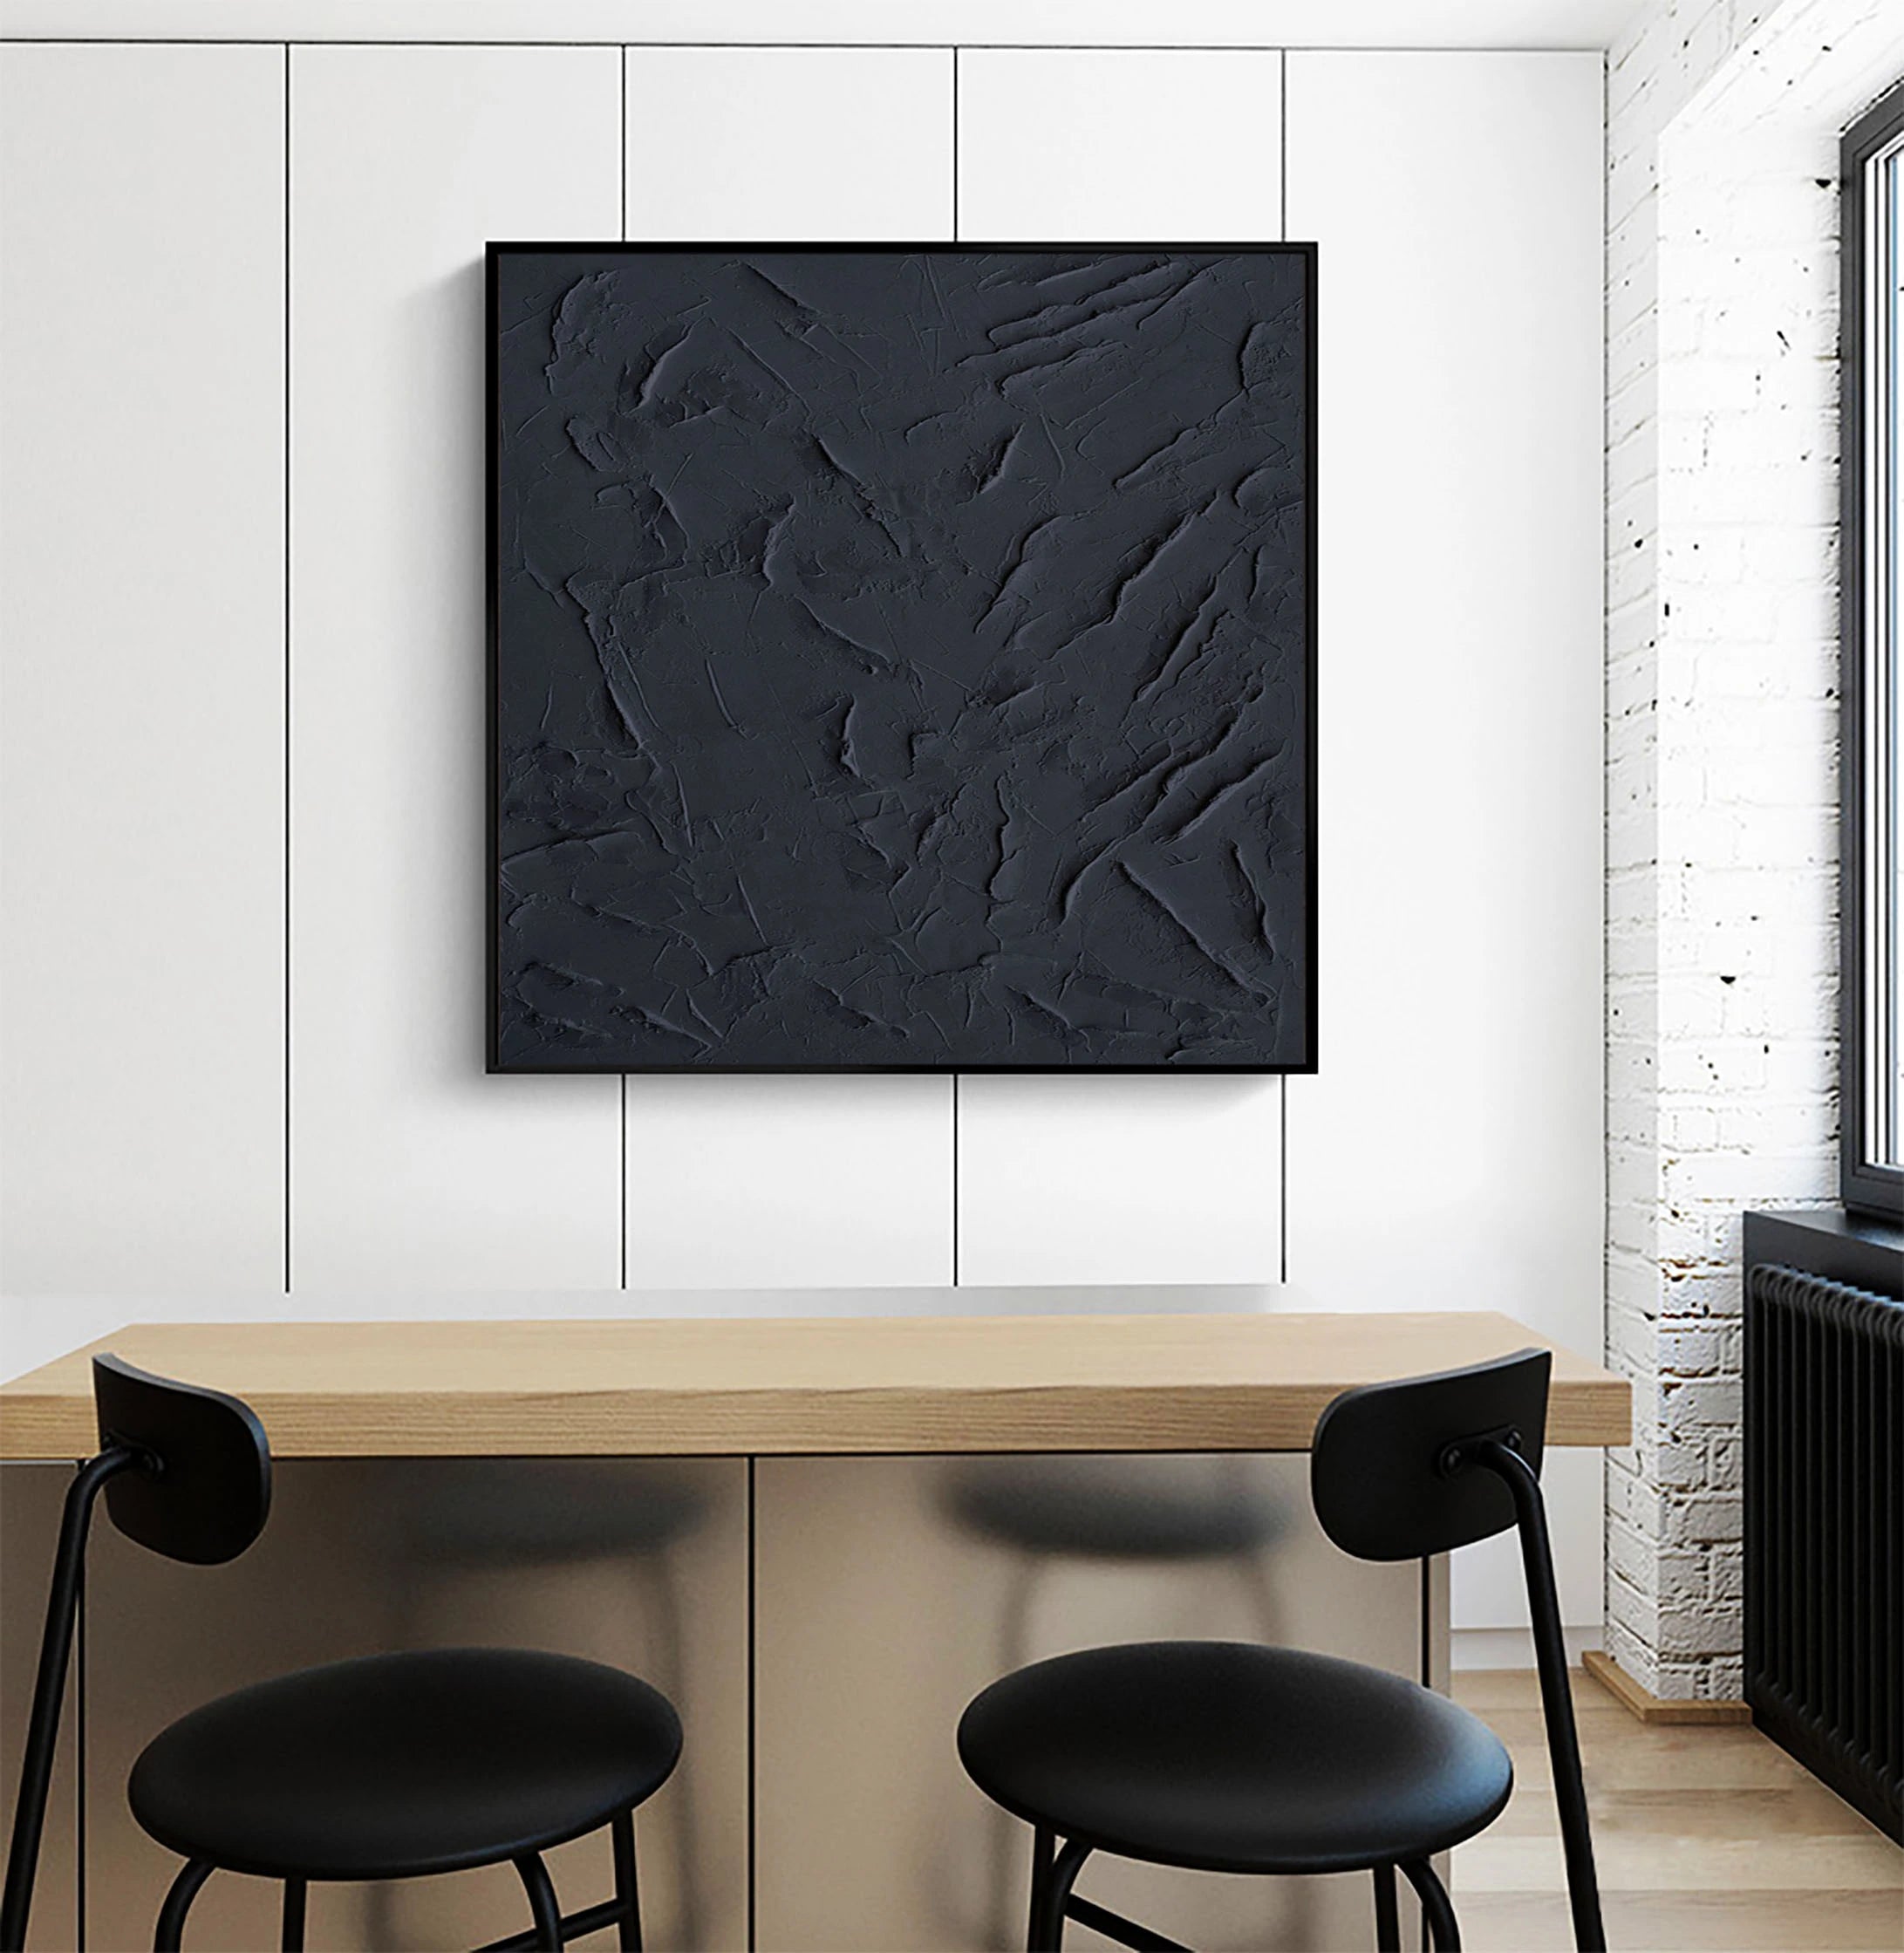 Black Textured Plaster Art Painting Minimalist Zen Wall Decor for Room